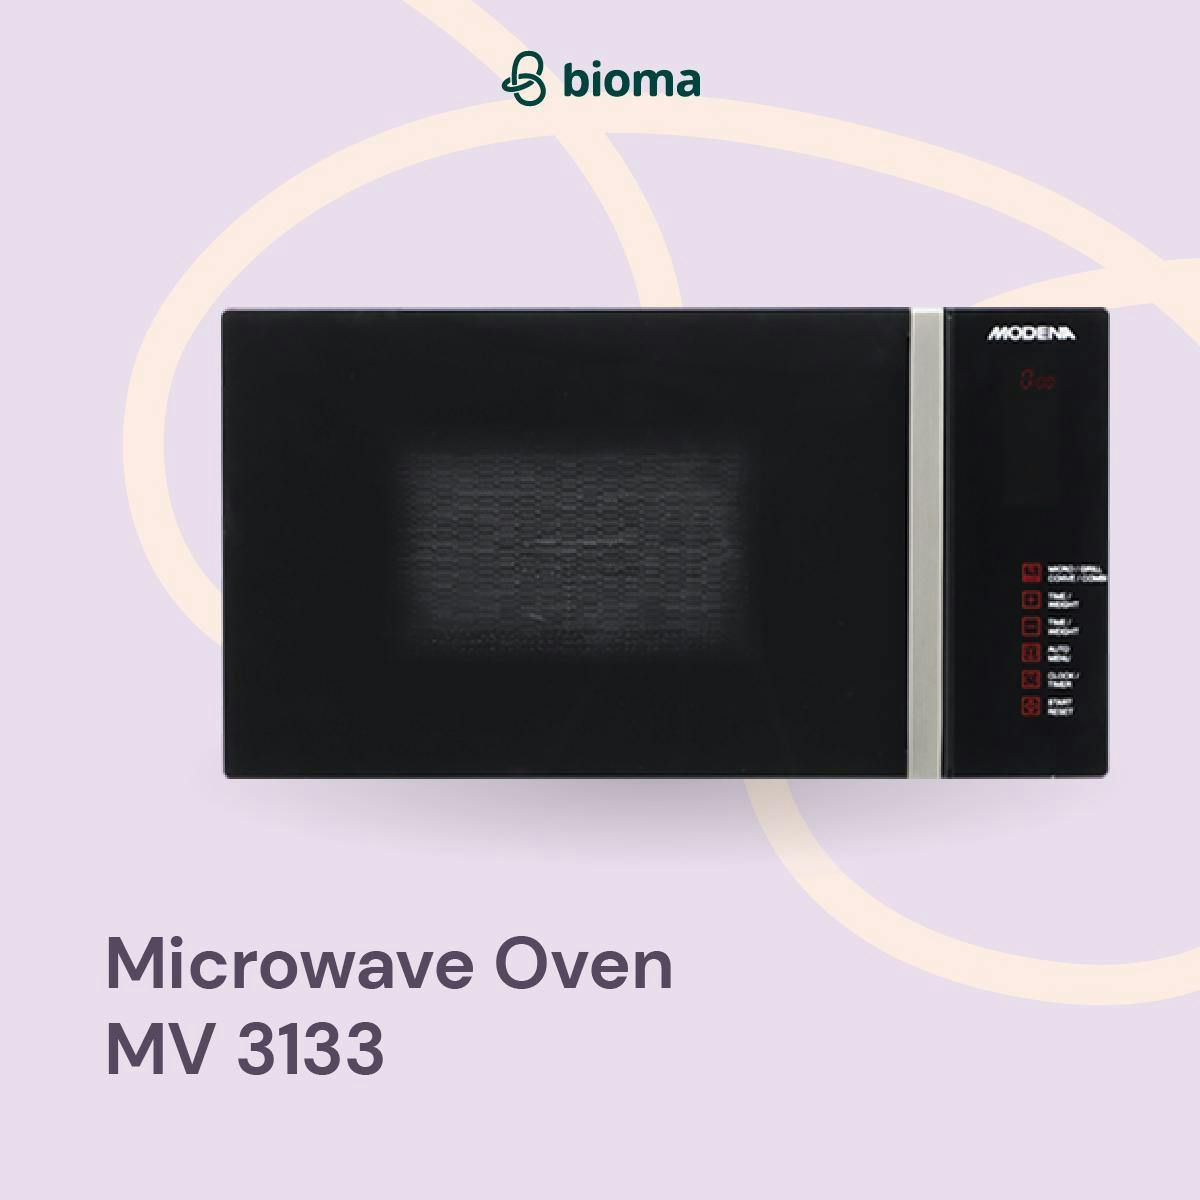 Microwave Oven MV 3133